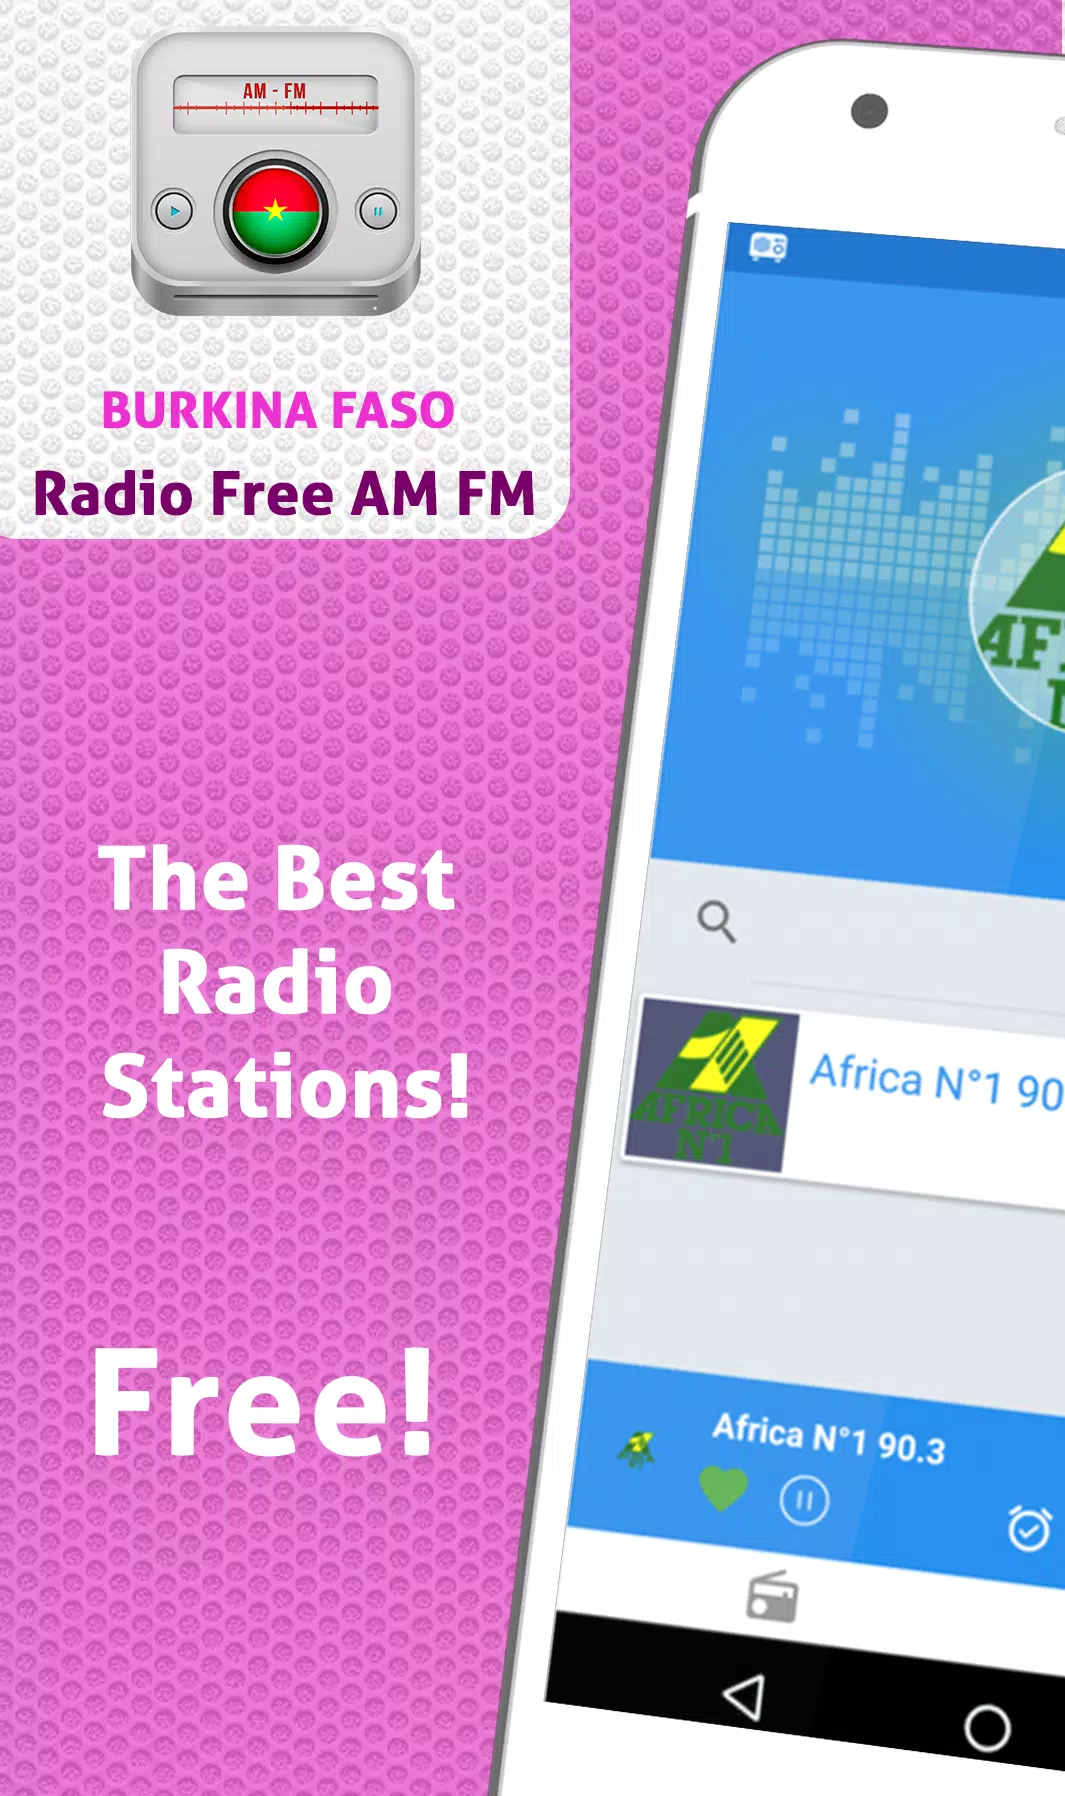 Radio Burkina Faso APK for Android Download